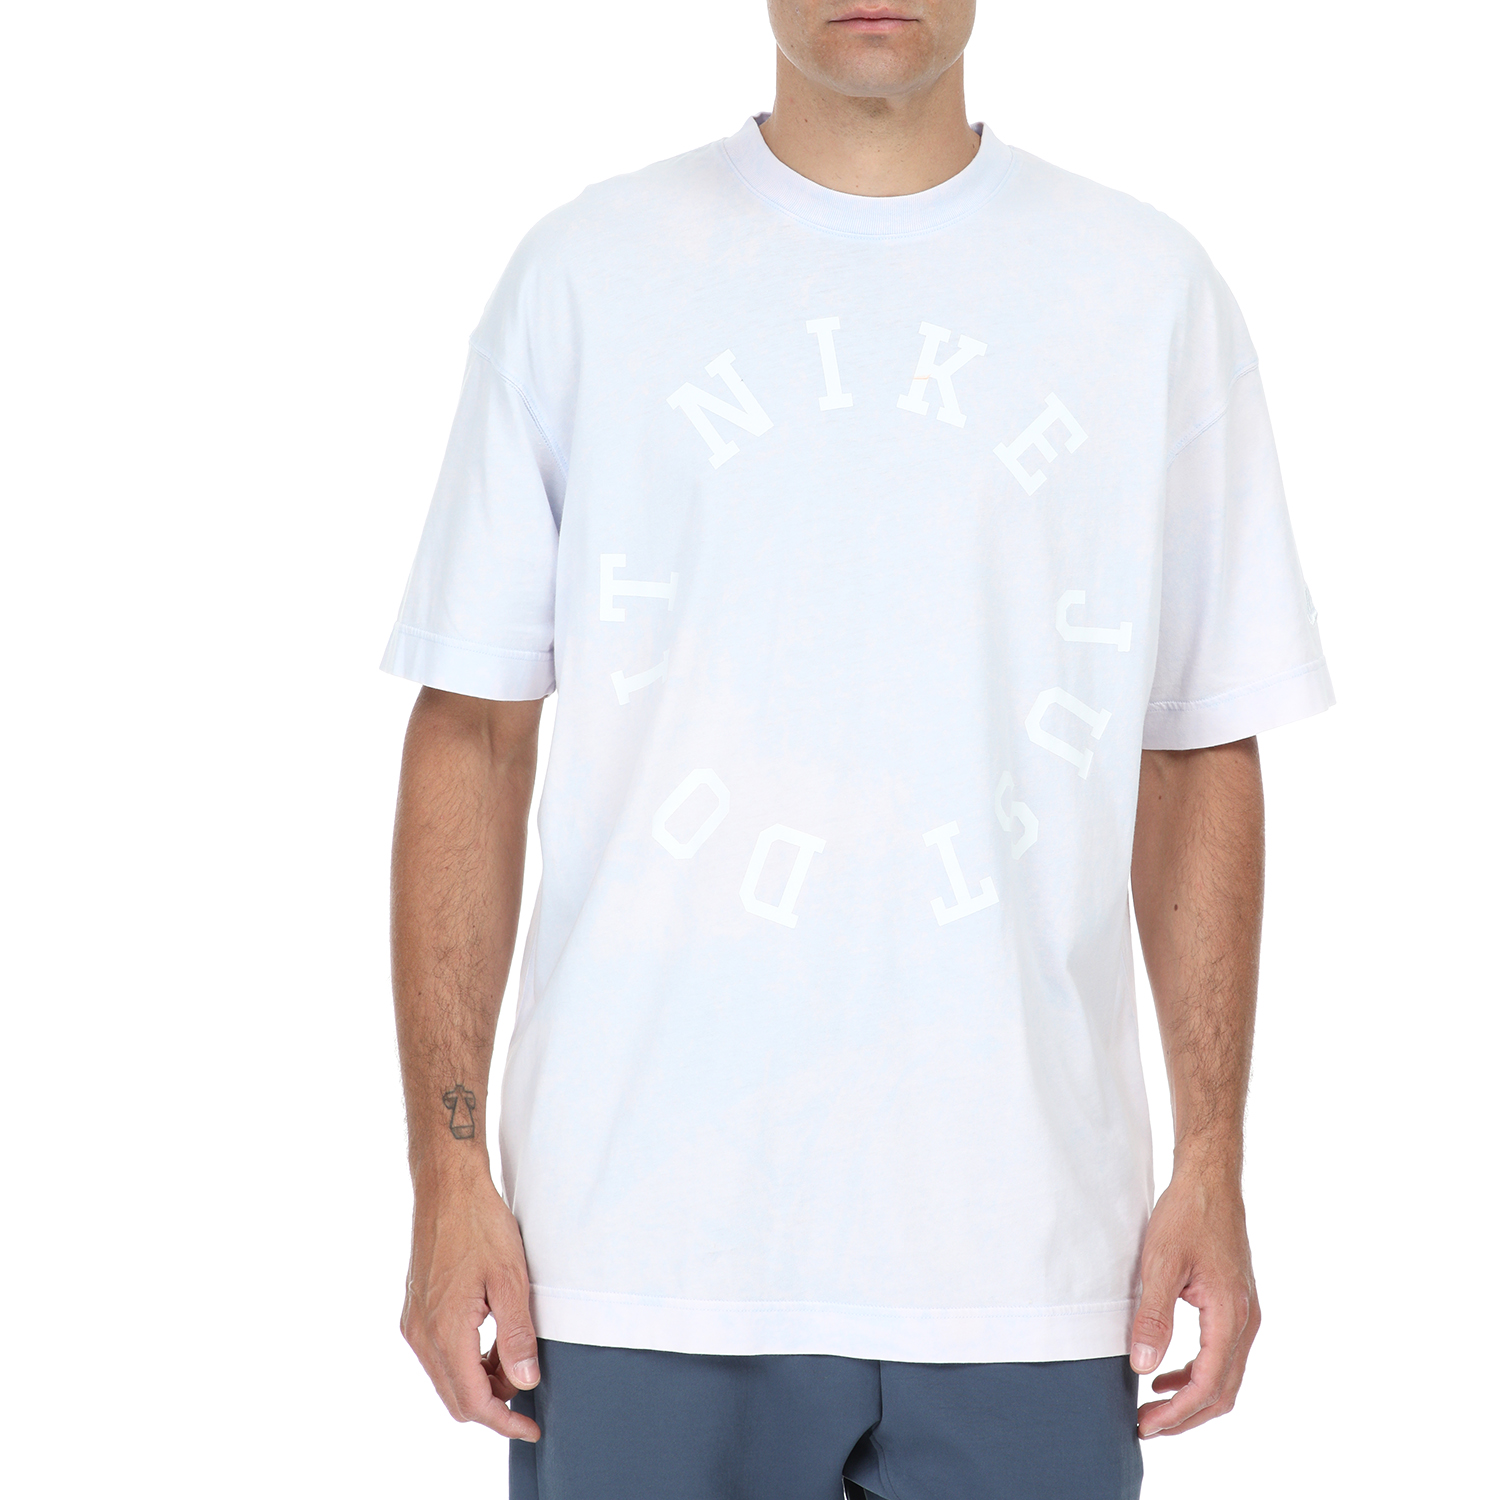 NIKE - Ανδρικό t-shirt NIKE Sportswear μπλε Ανδρικά/Ρούχα/Αθλητικά/T-shirt